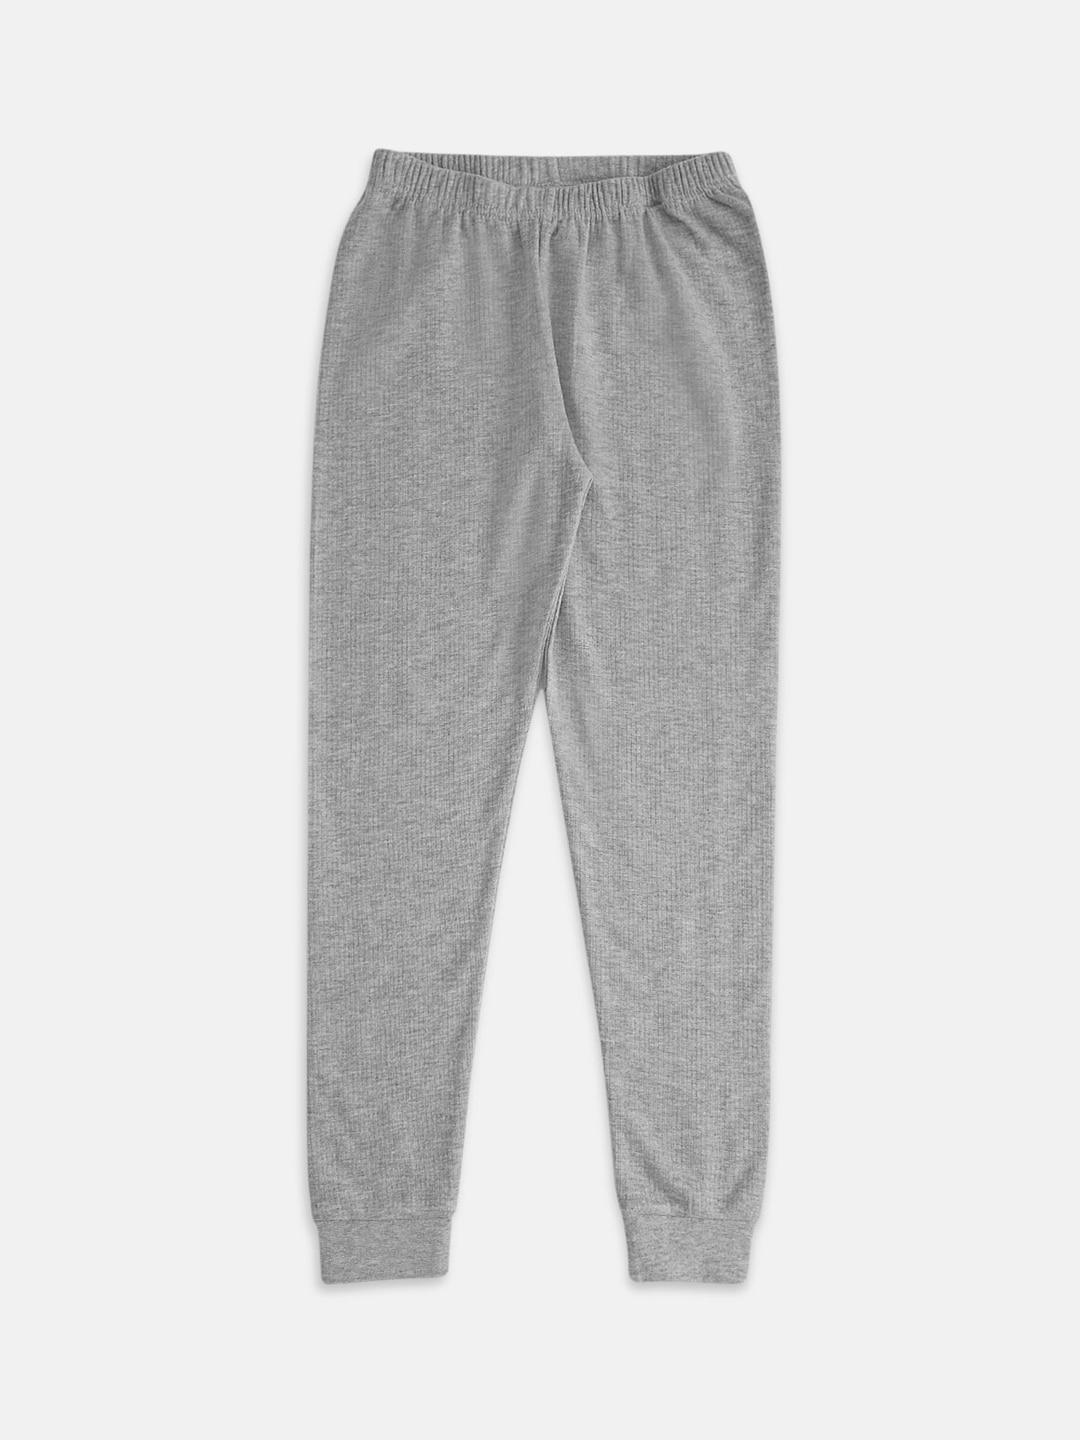 pantaloons-junior-boys-grey-melange-solid-thermal-bottom